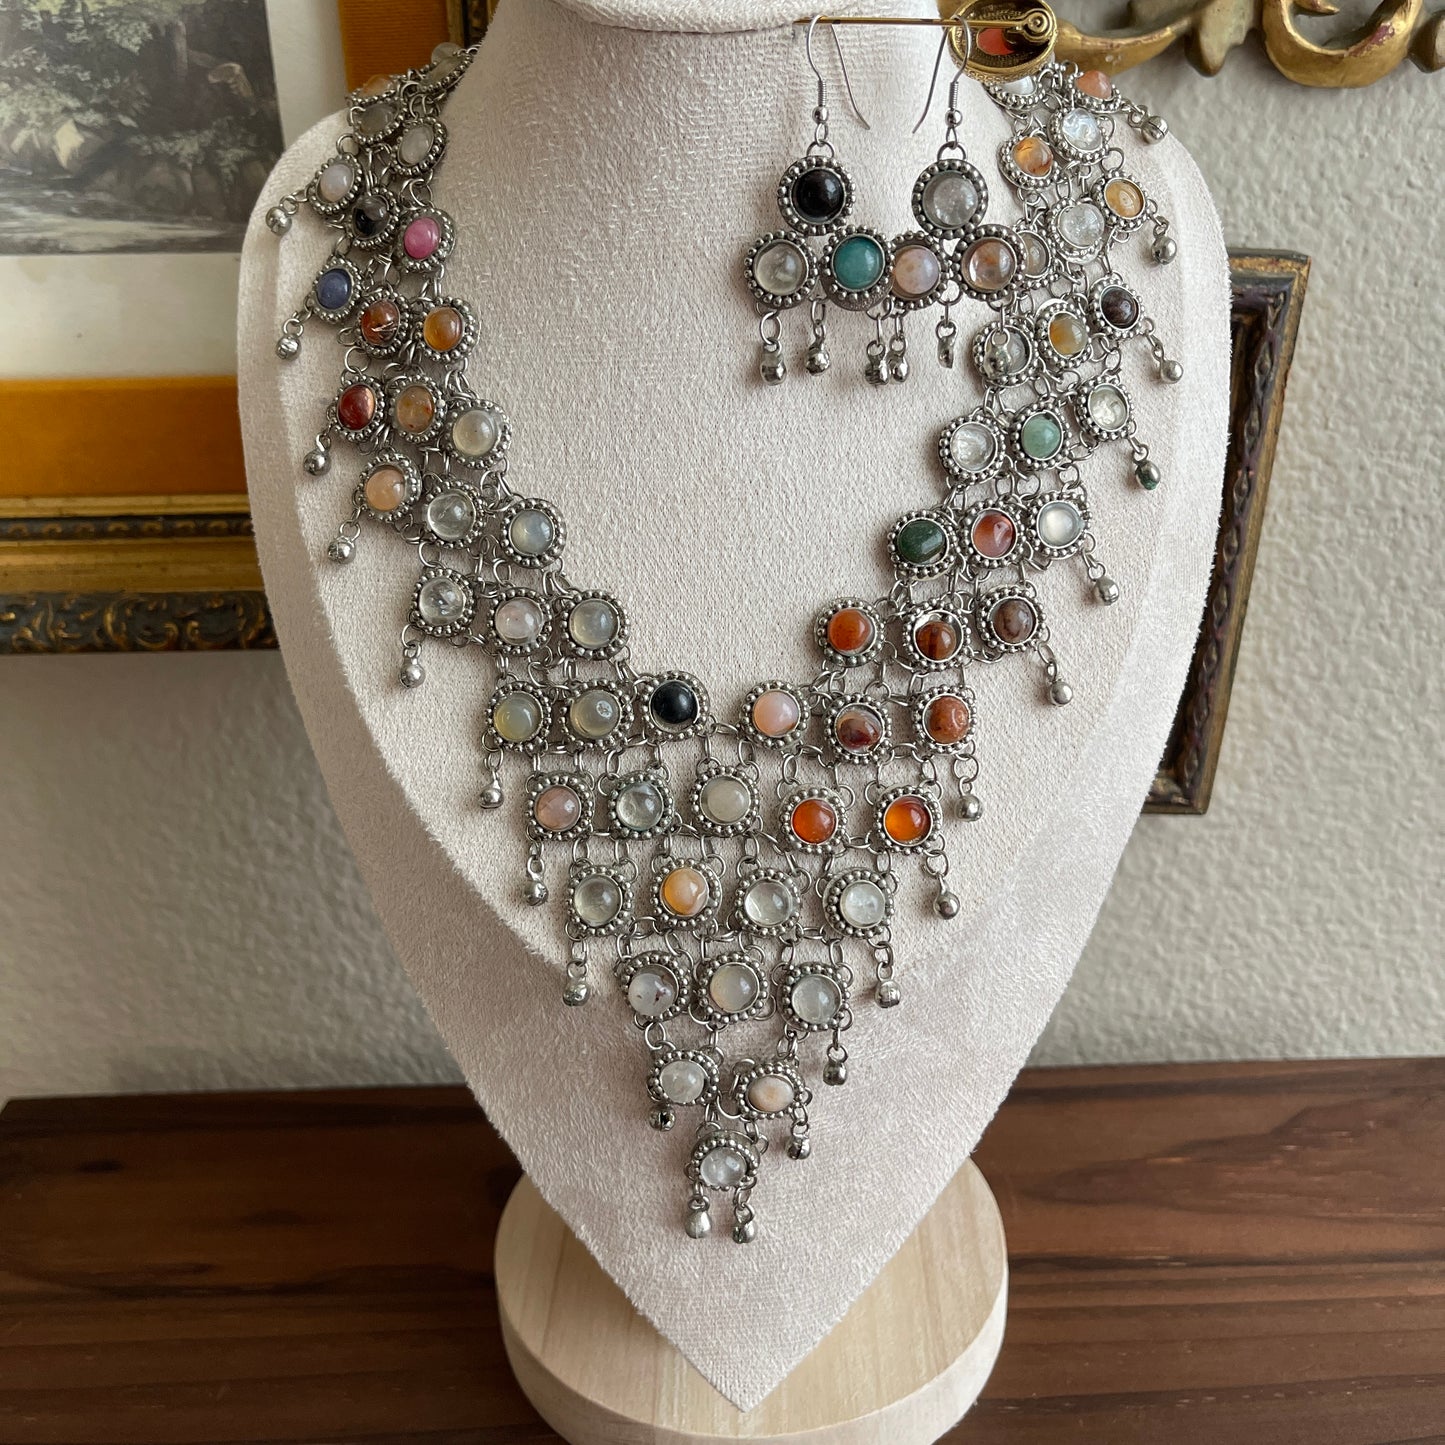 Silver tone Morocoo bib style semi precious stones with matching earrings